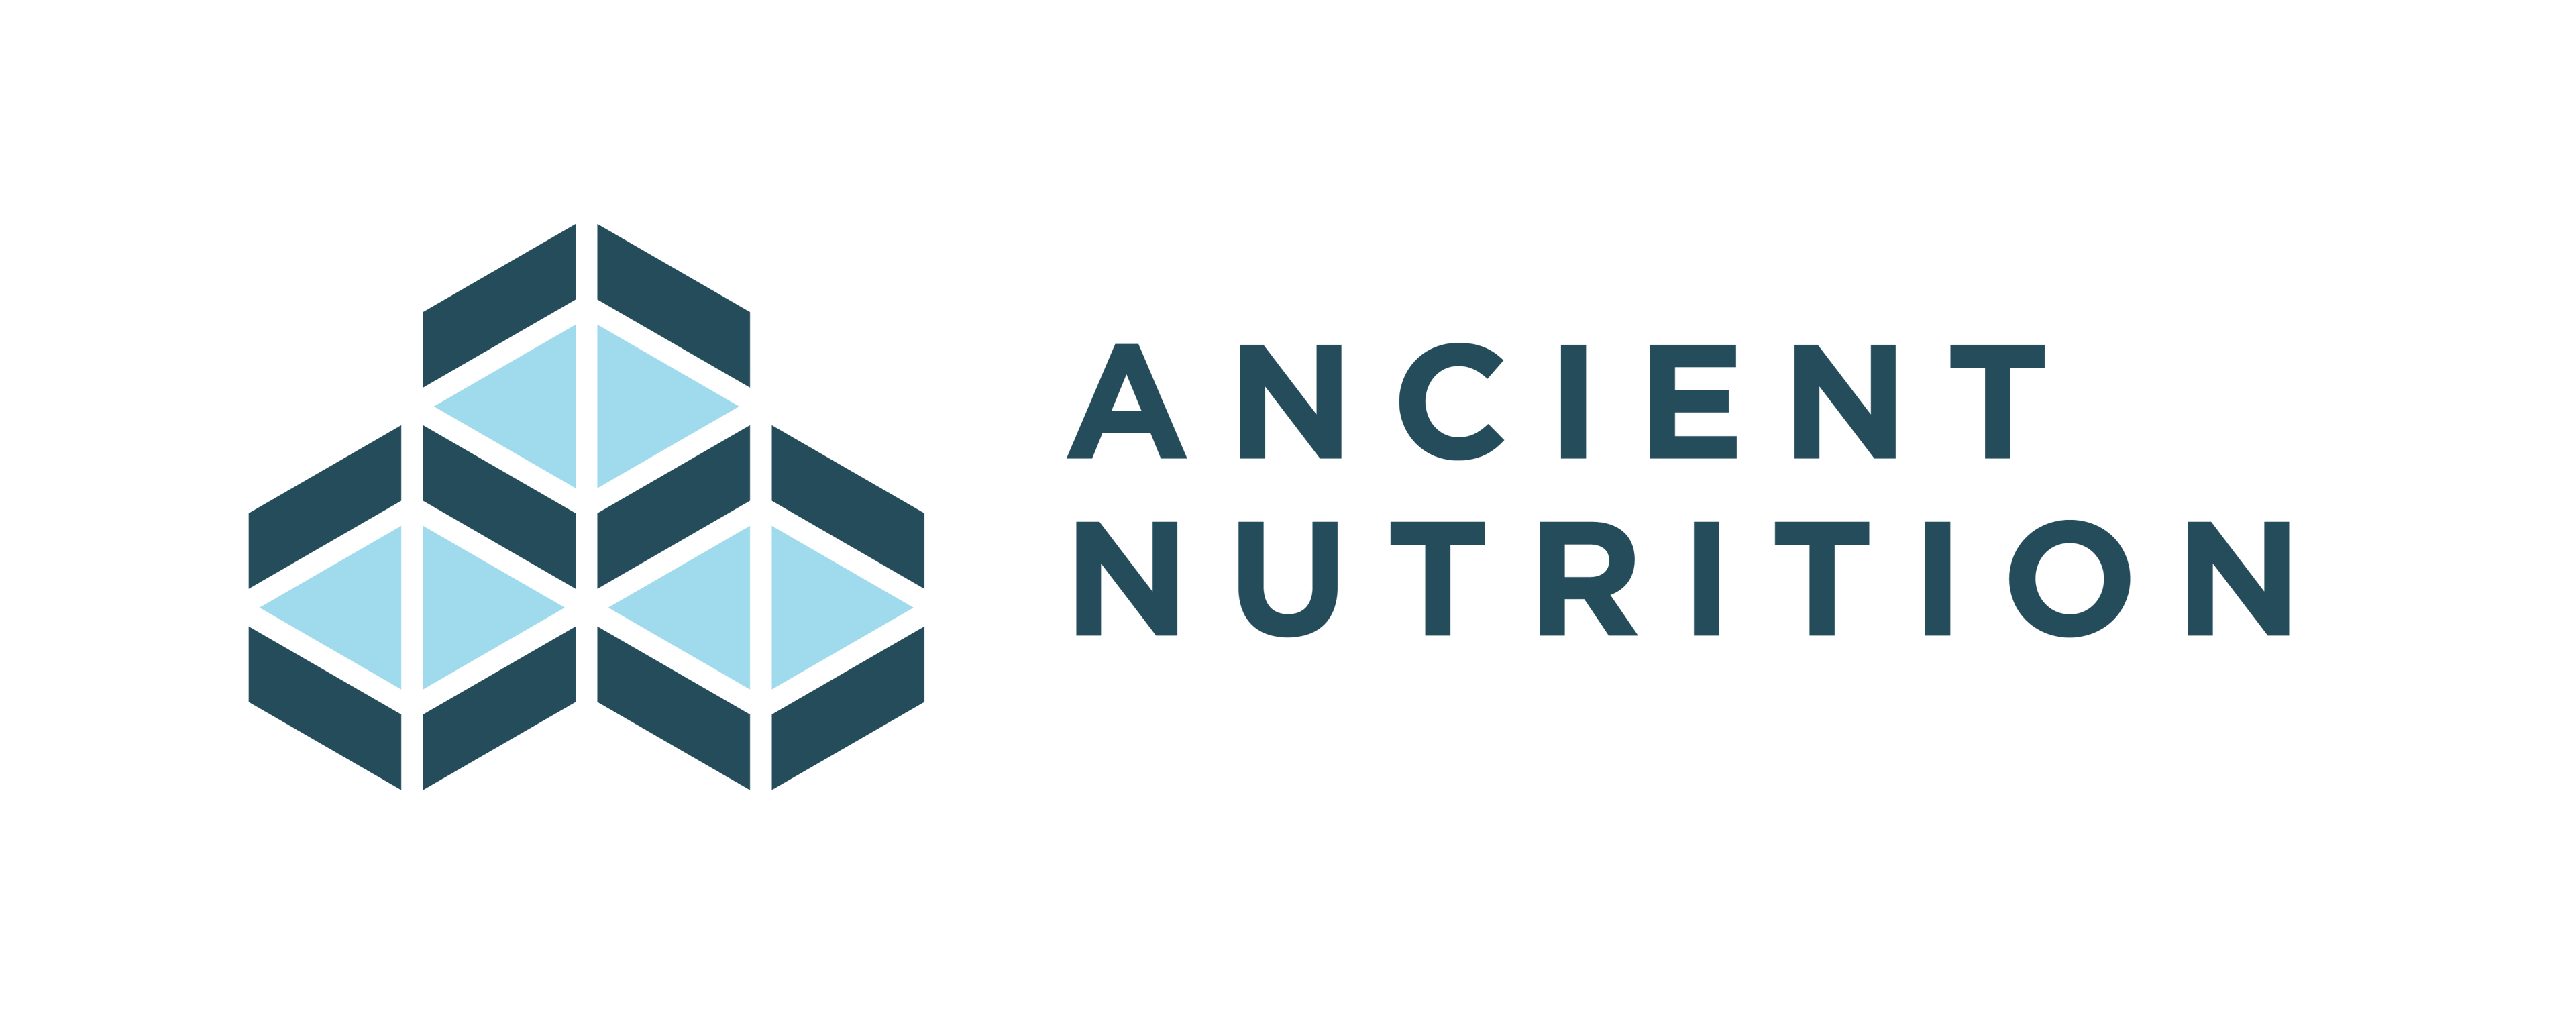 Ancient Nutrition CBD logo